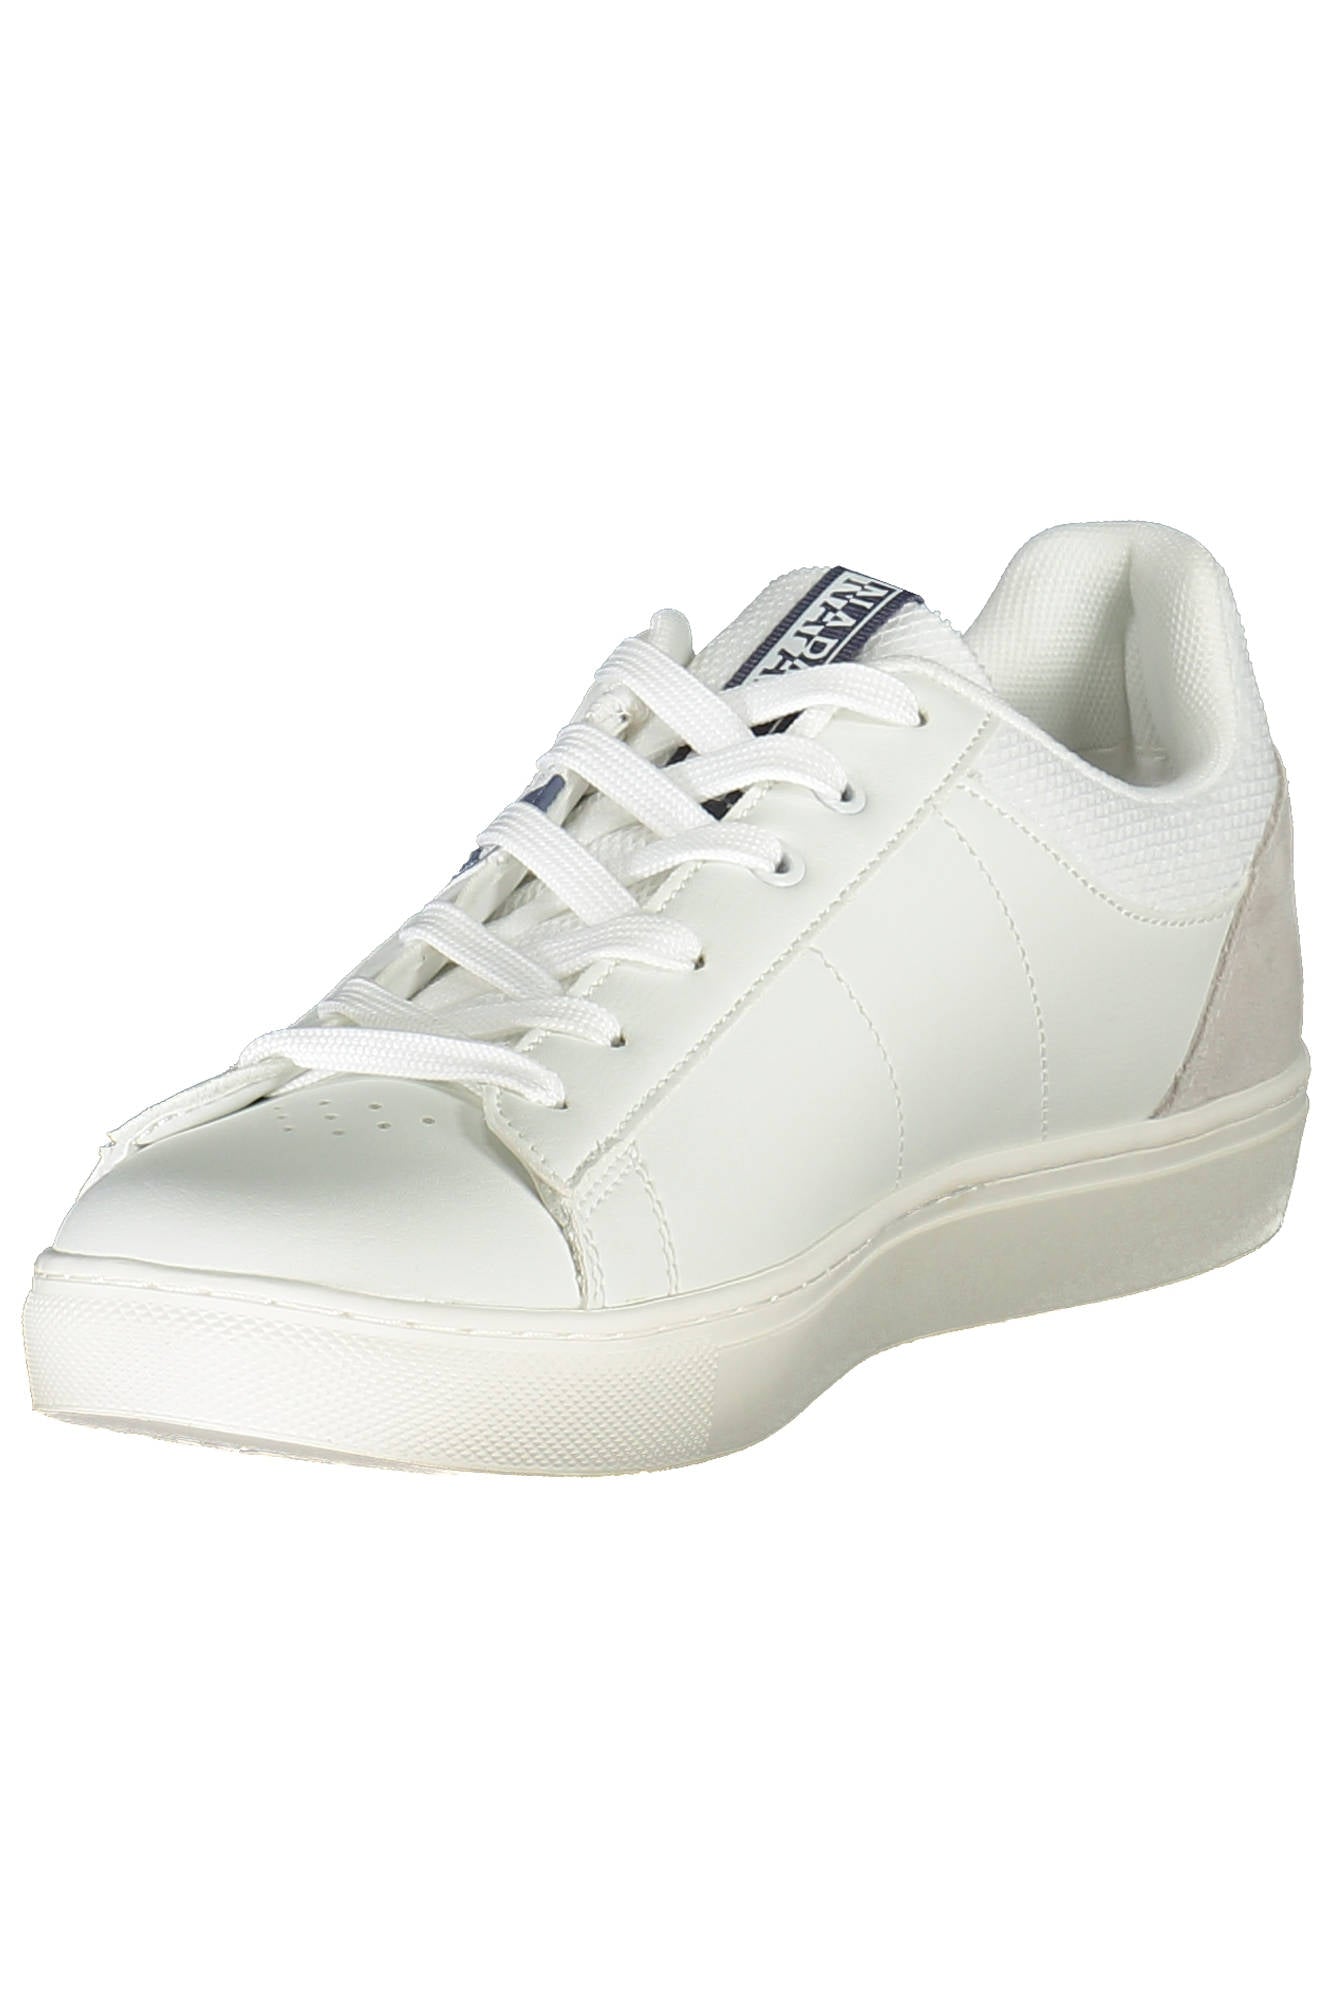 Napapijri White Polyester Sneaker - Fizigo